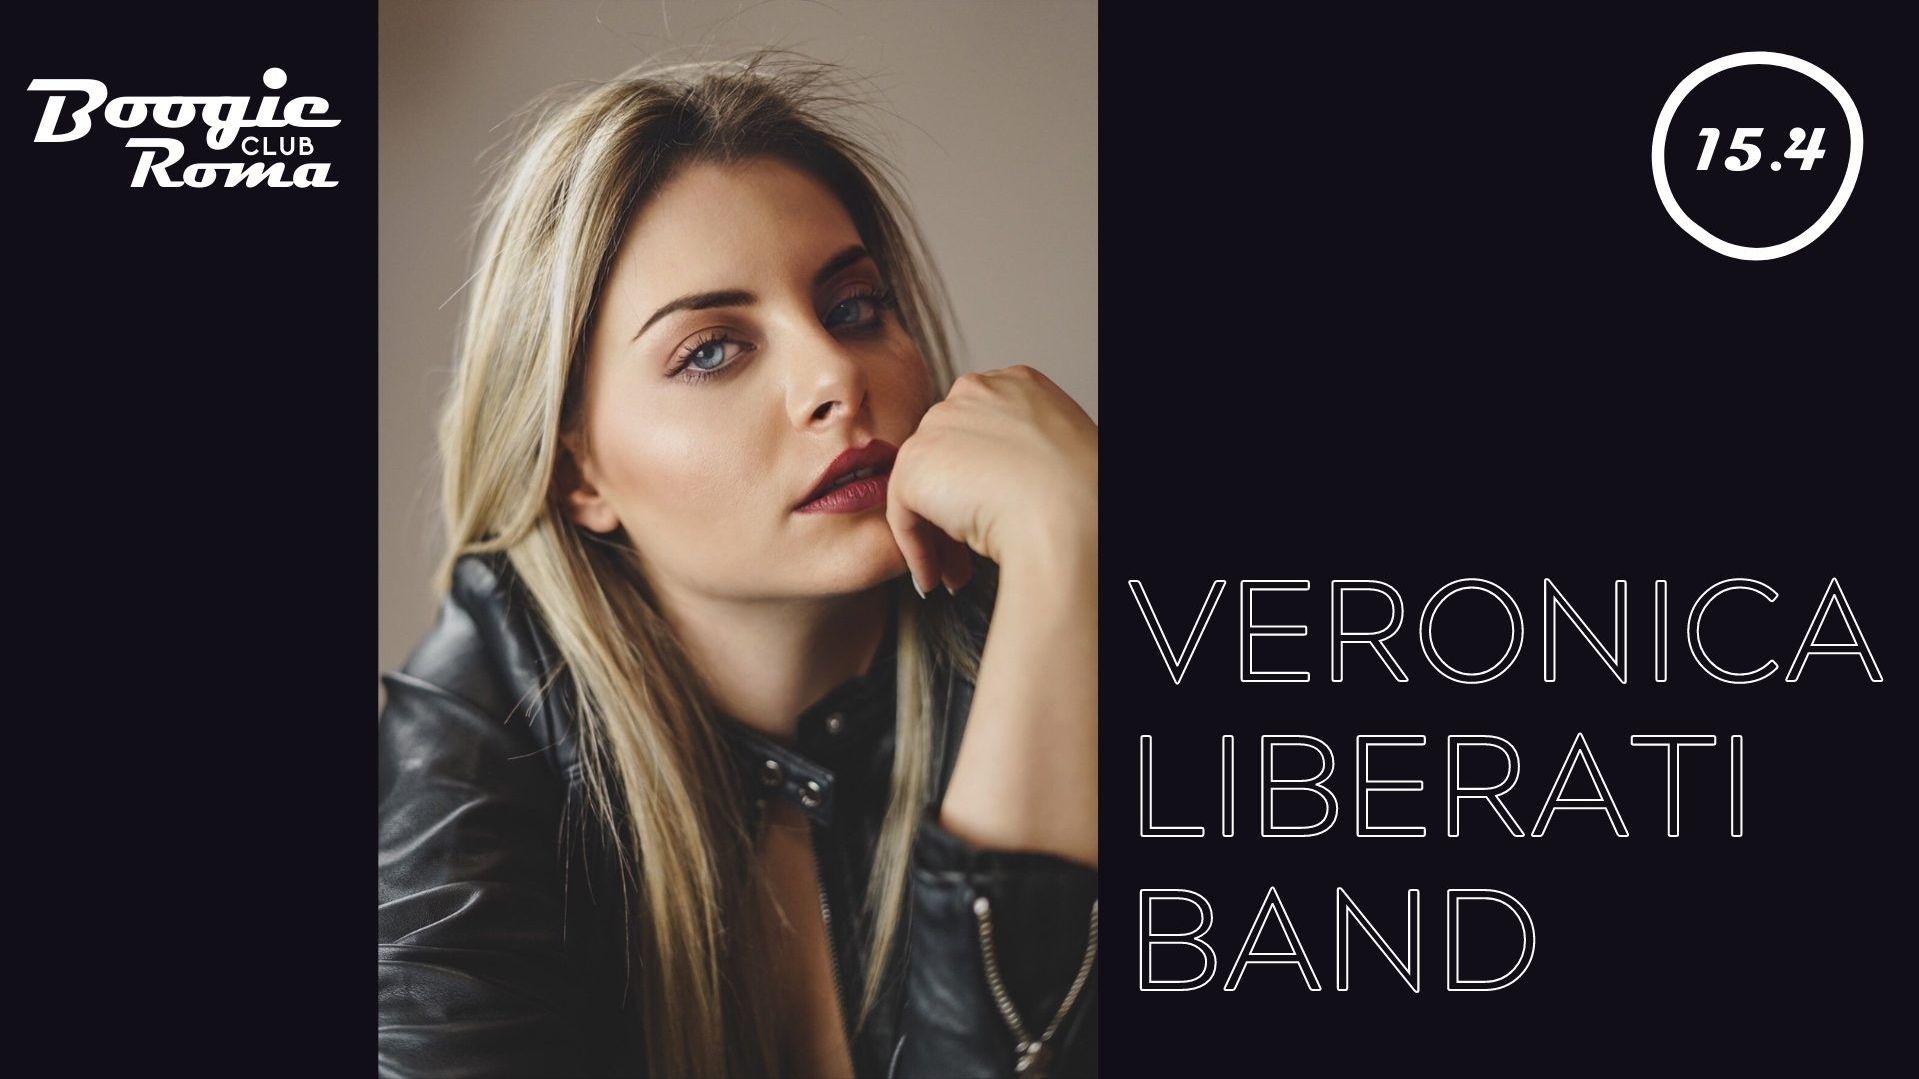 Veronica Liberati band